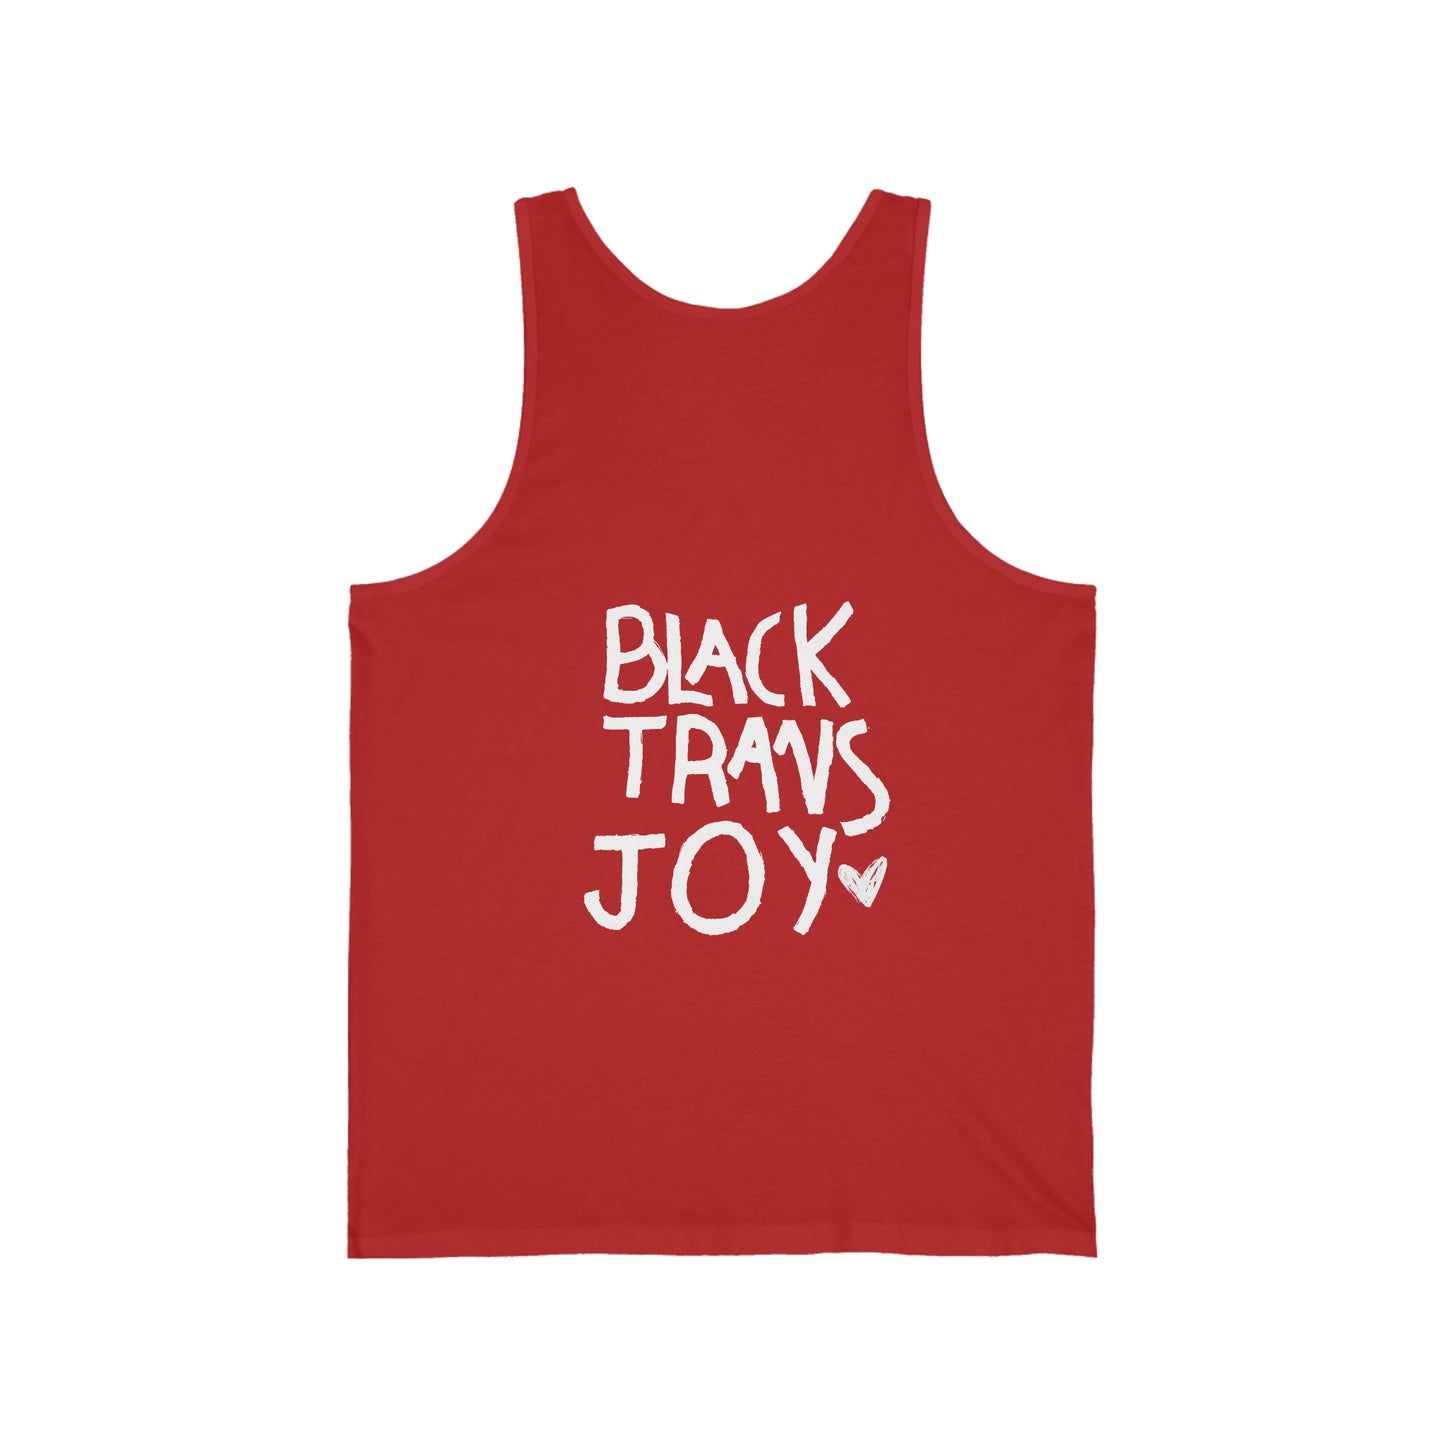 Black Trans Joy Jersey Tank